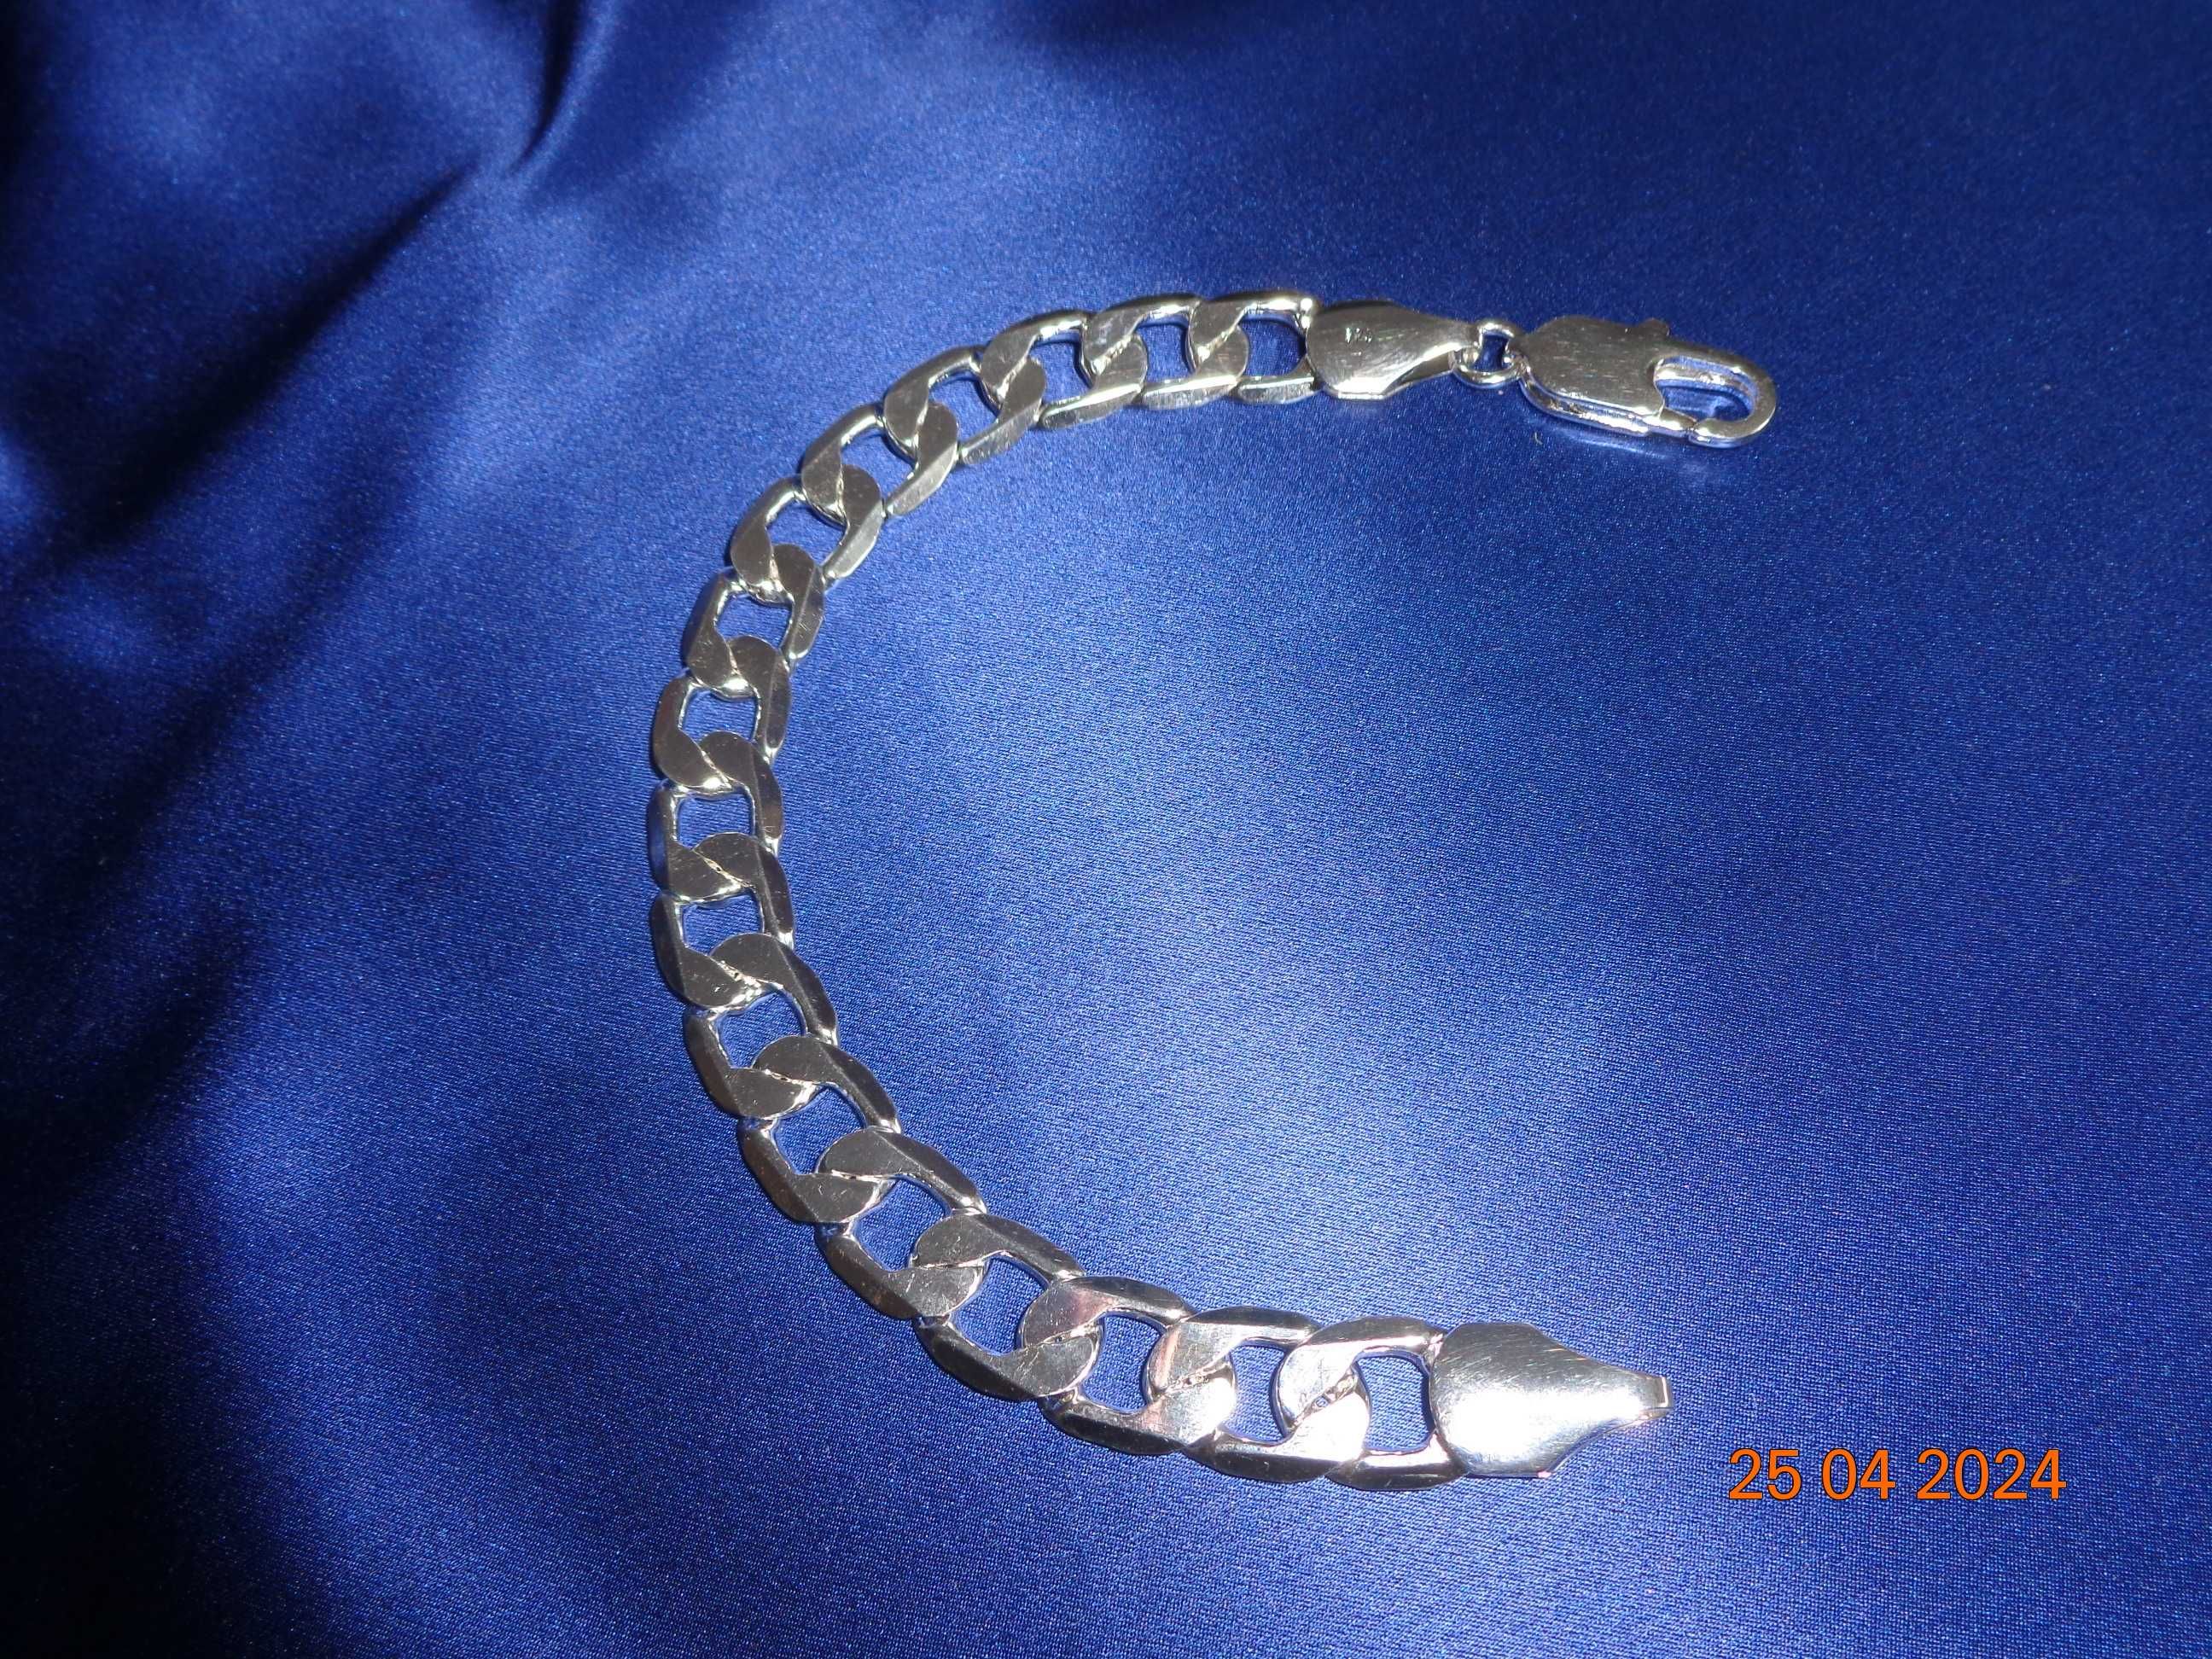 łańcuszek i bransoletka pancerka  gruba 12mm posrebrzana srebrem 925